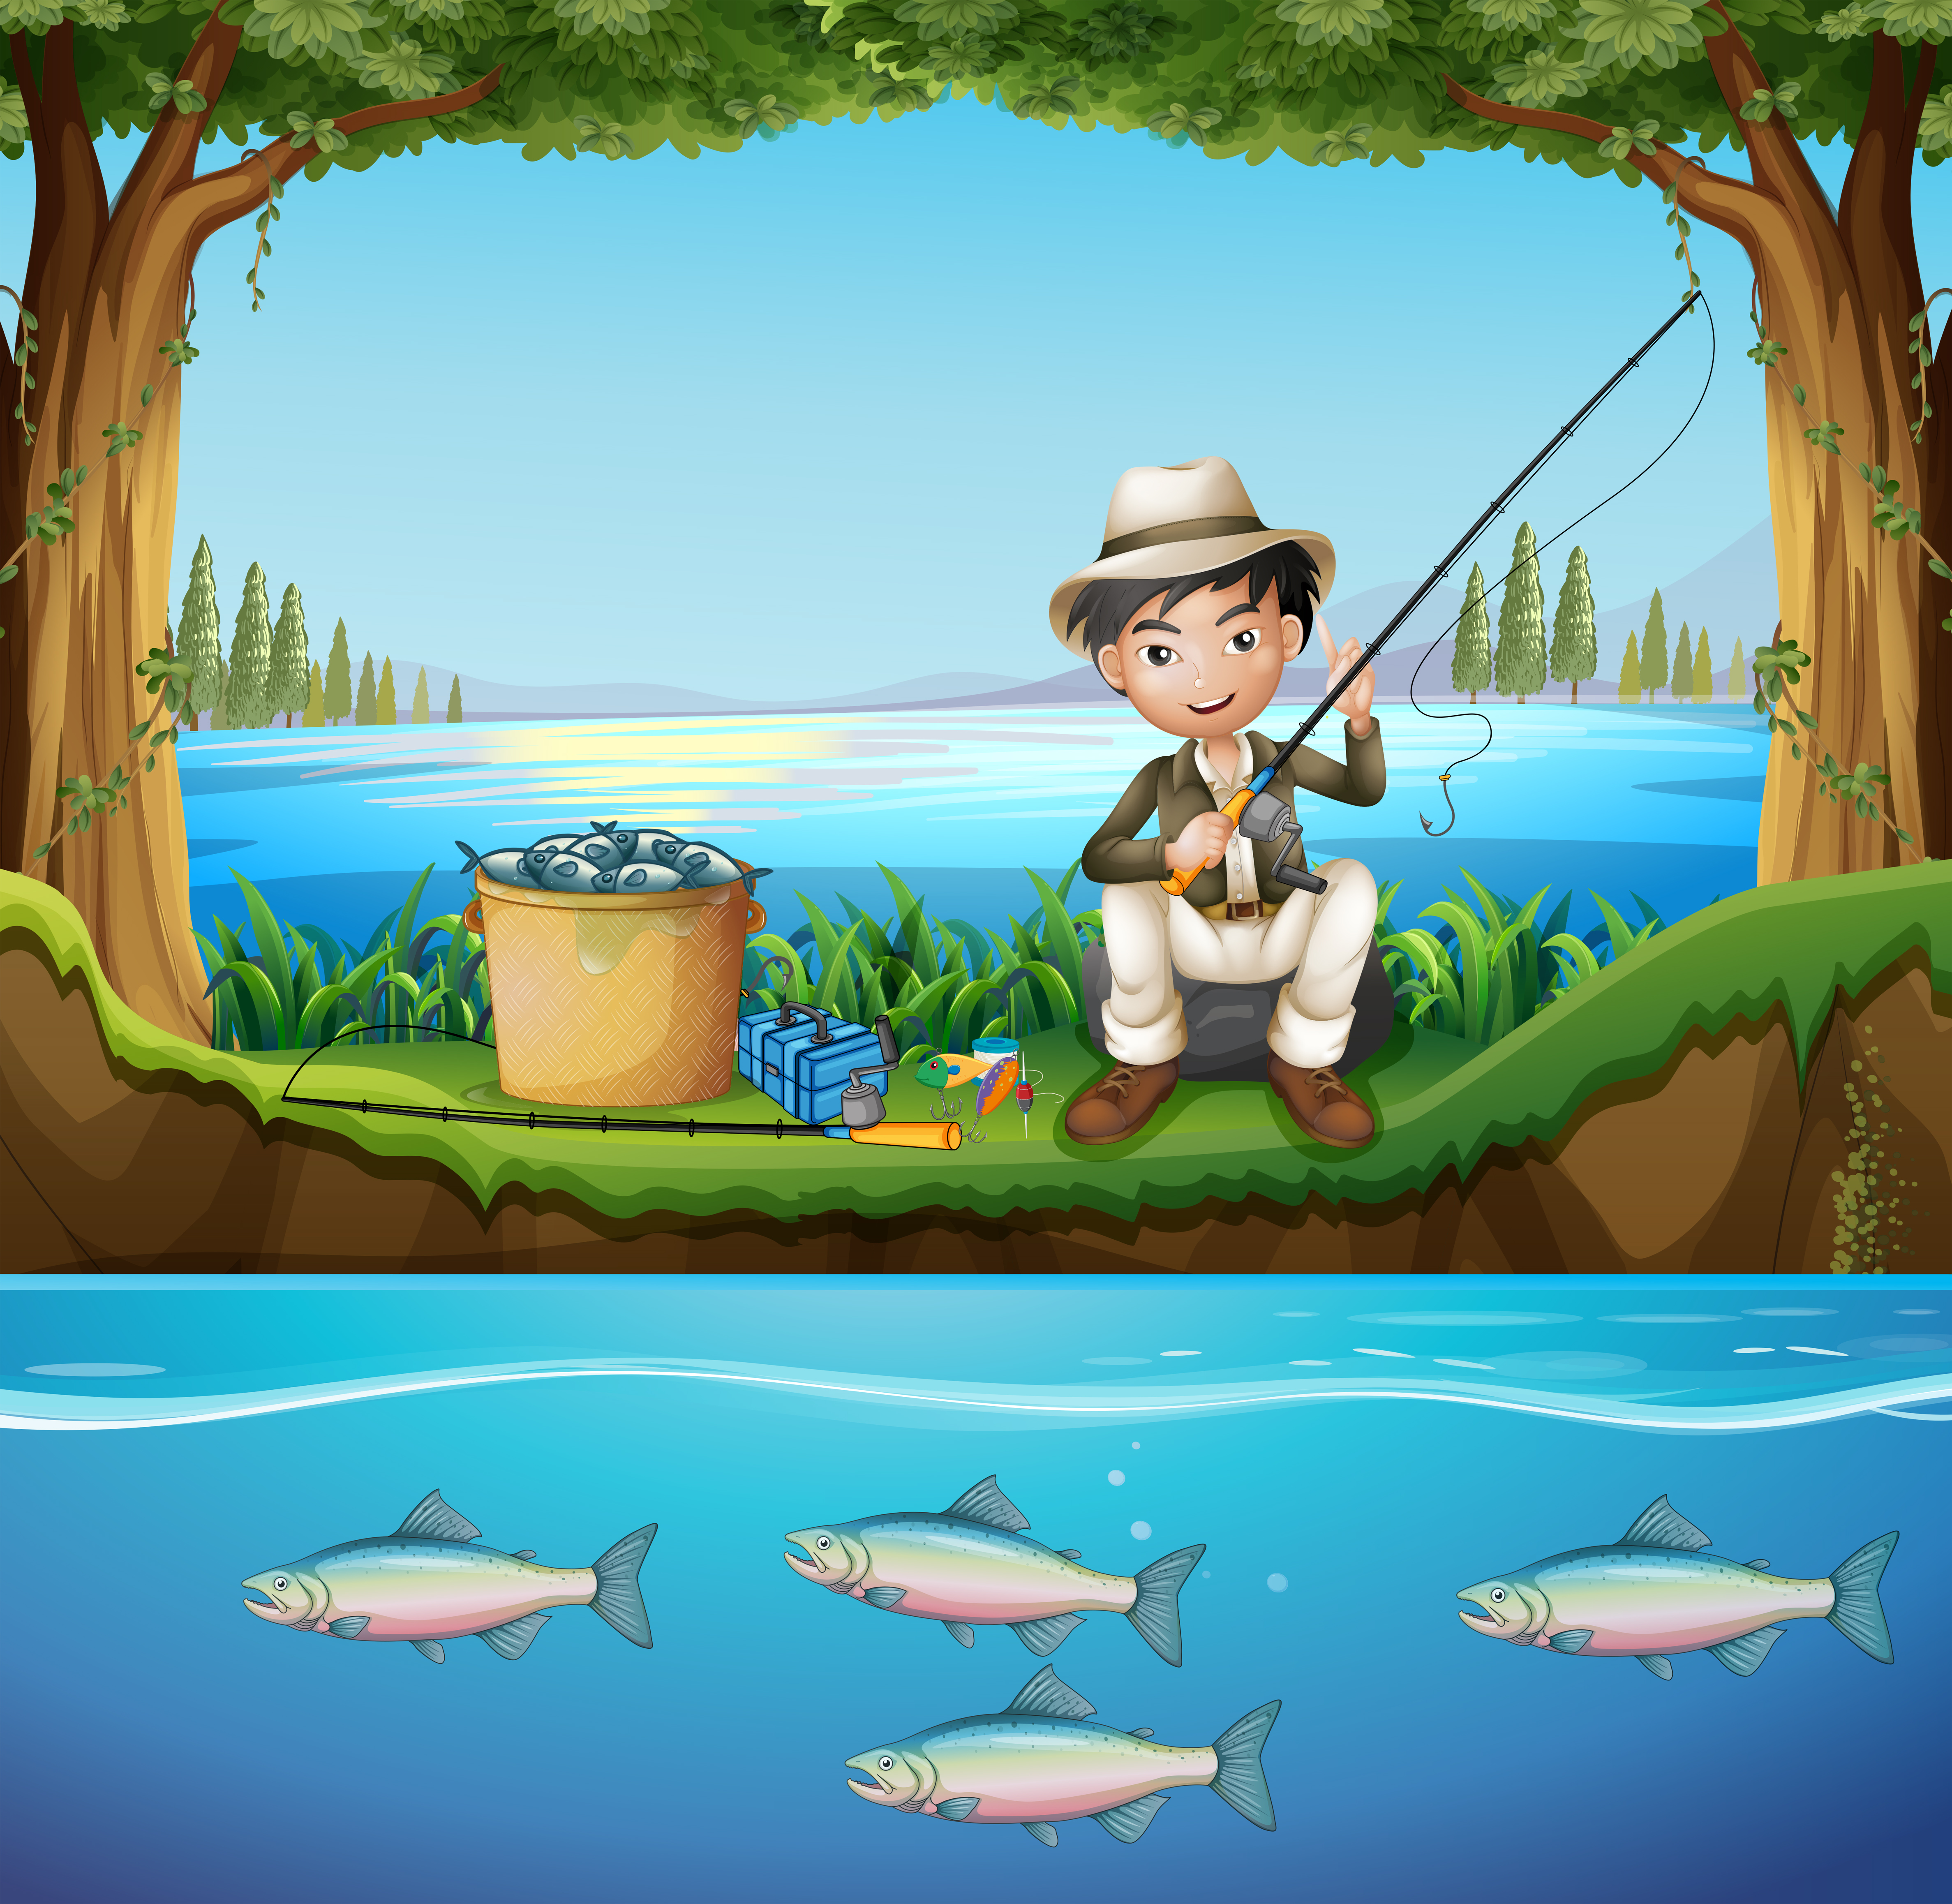 Download Man fishing in the river 519778 - Download Free Vectors, Clipart Graphics & Vector Art